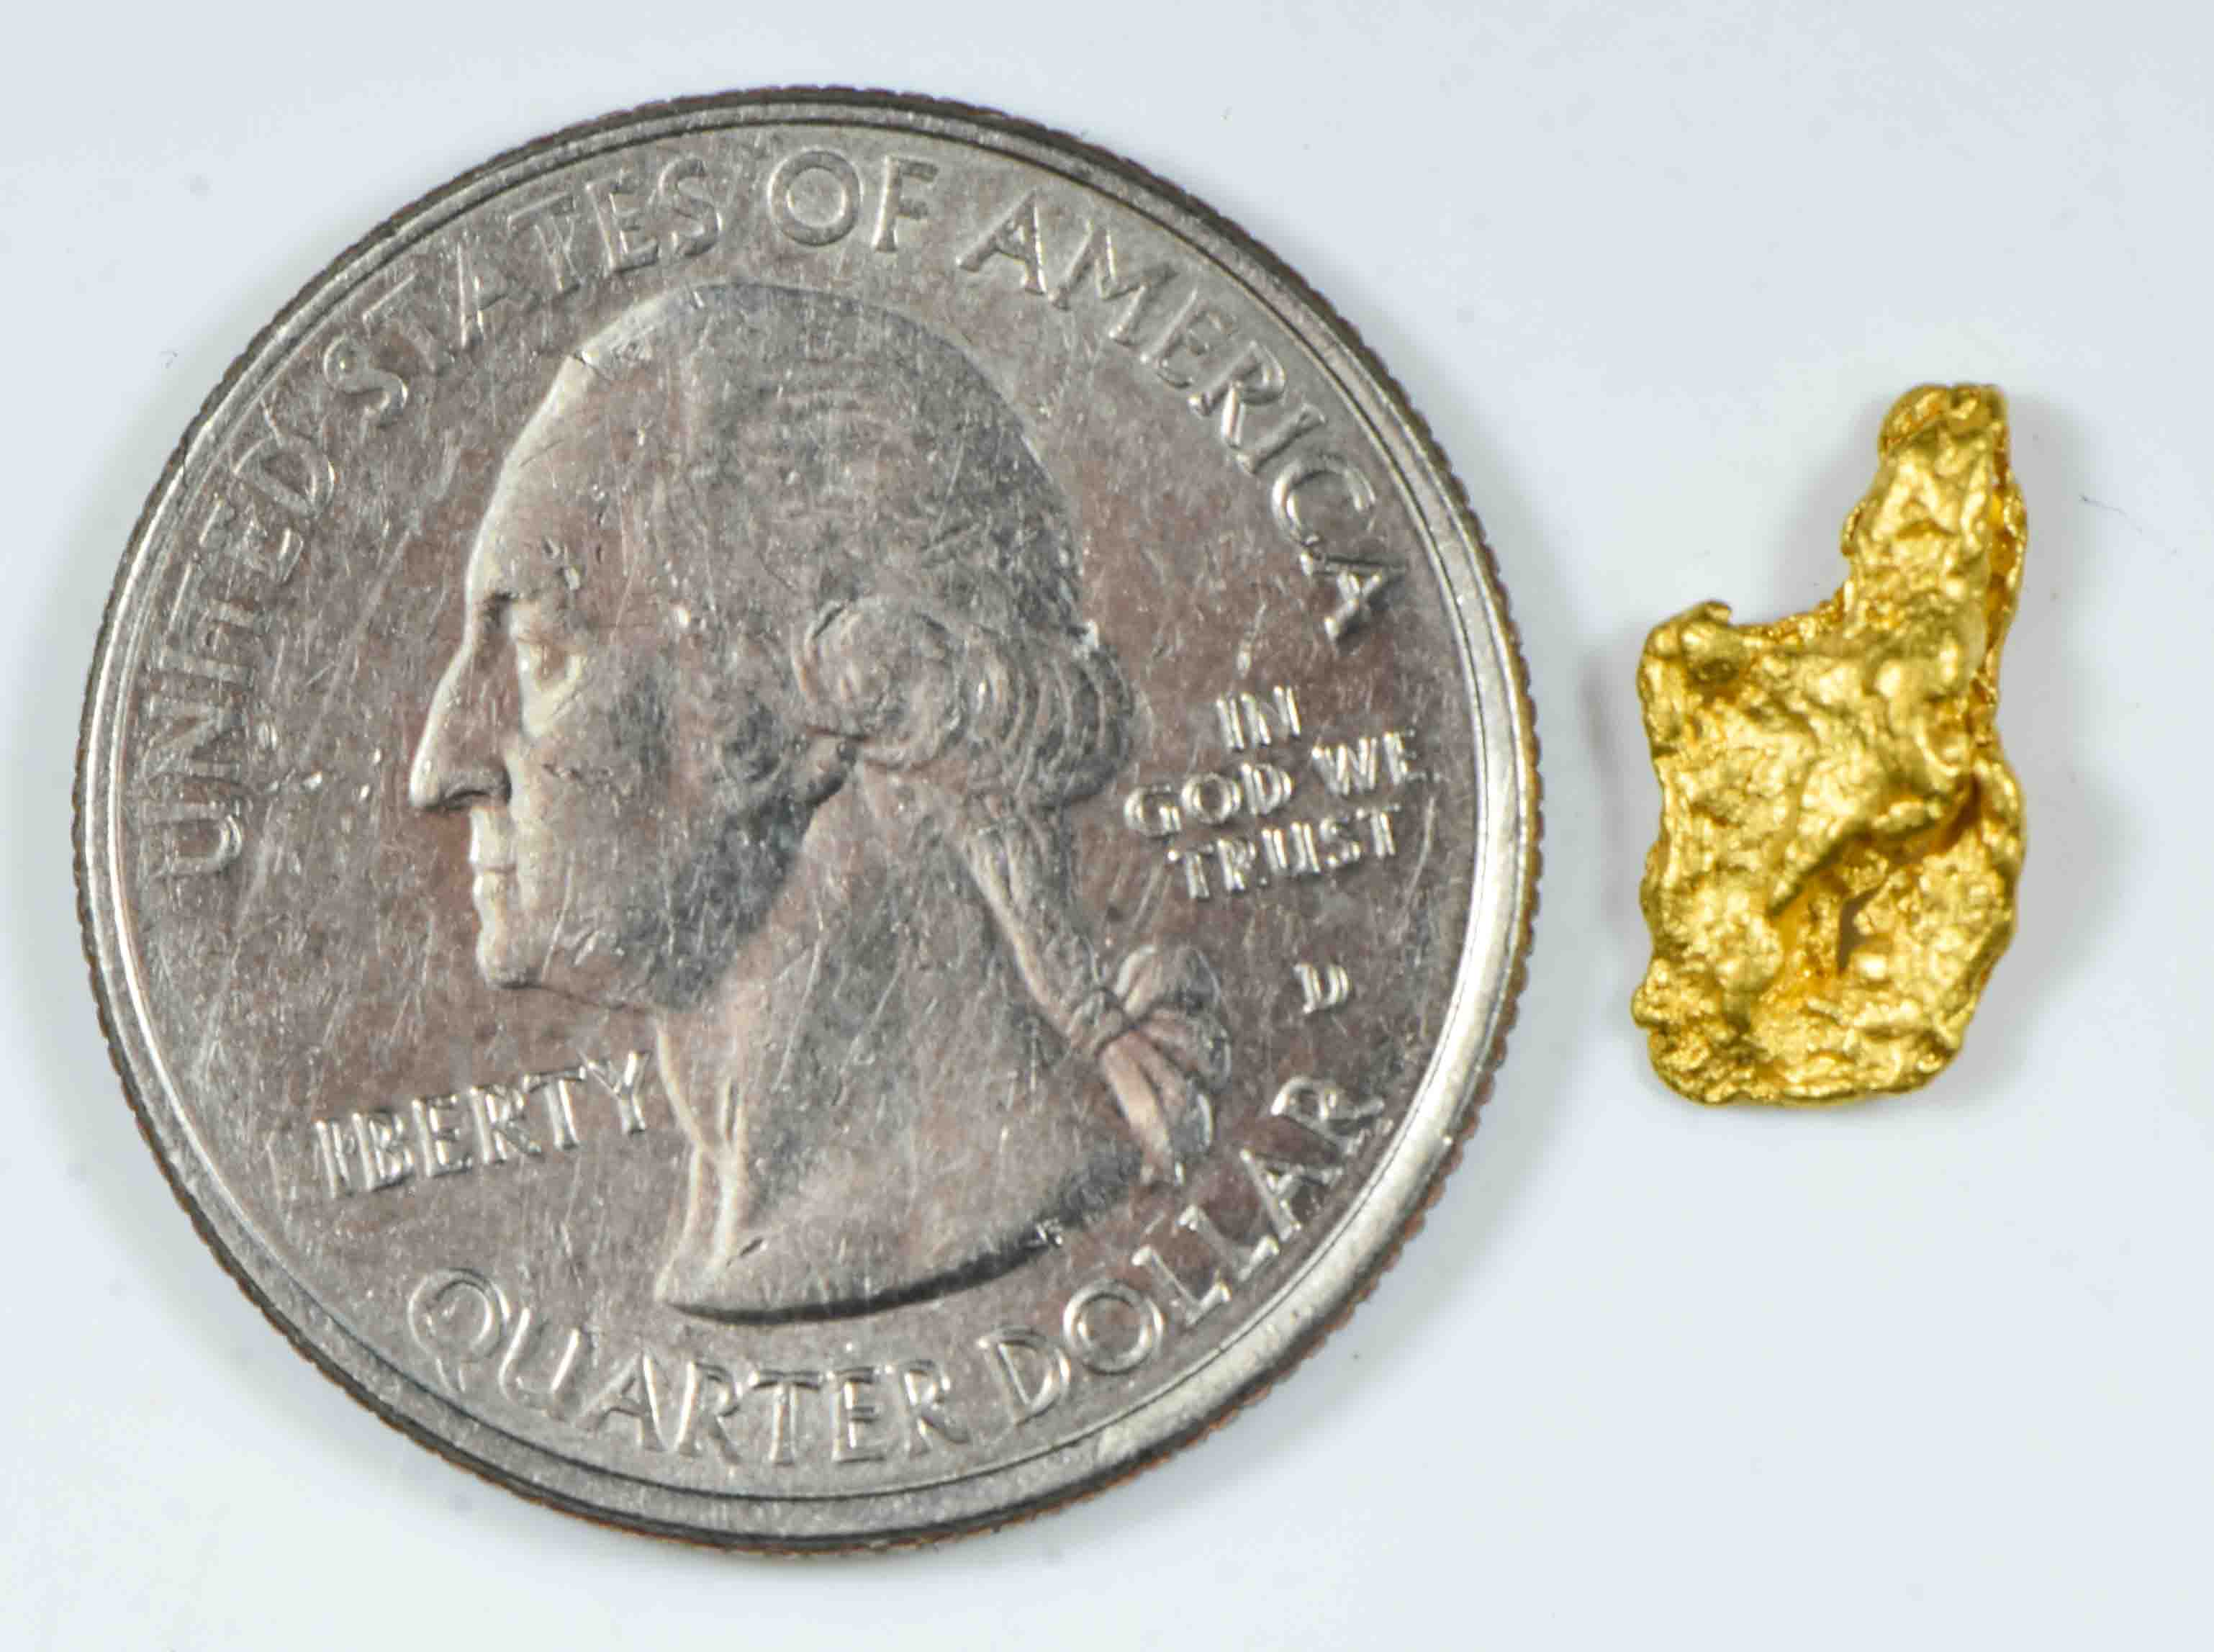 #738 Natural Gold Nugget Australian .78 Grams Genuine